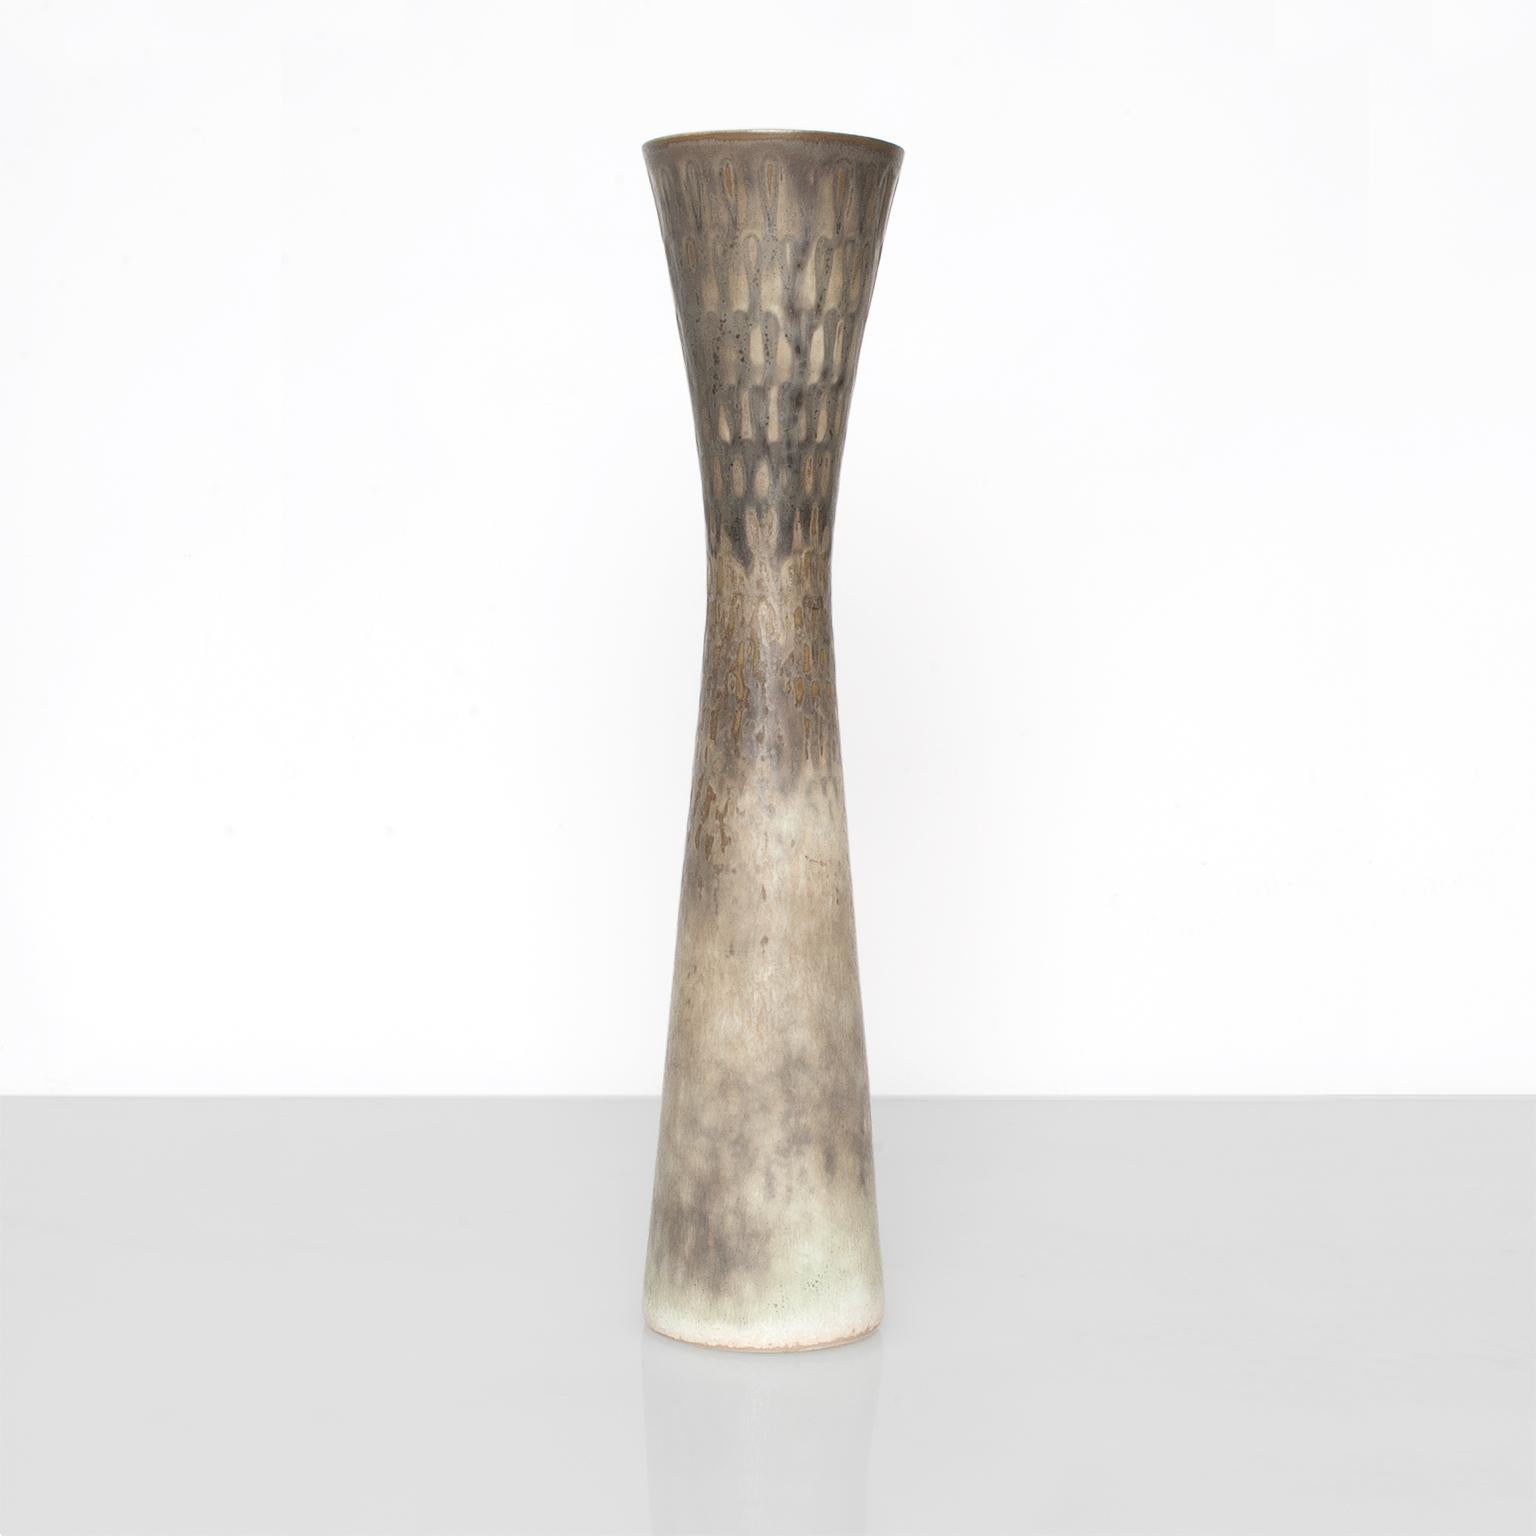 Elegant tall Scandinavian Modern ceramic vase in a pale molded gray glaze by Carl-Harry Stålhane for Rorstrand, Sweden.
Measures: Height 12.25